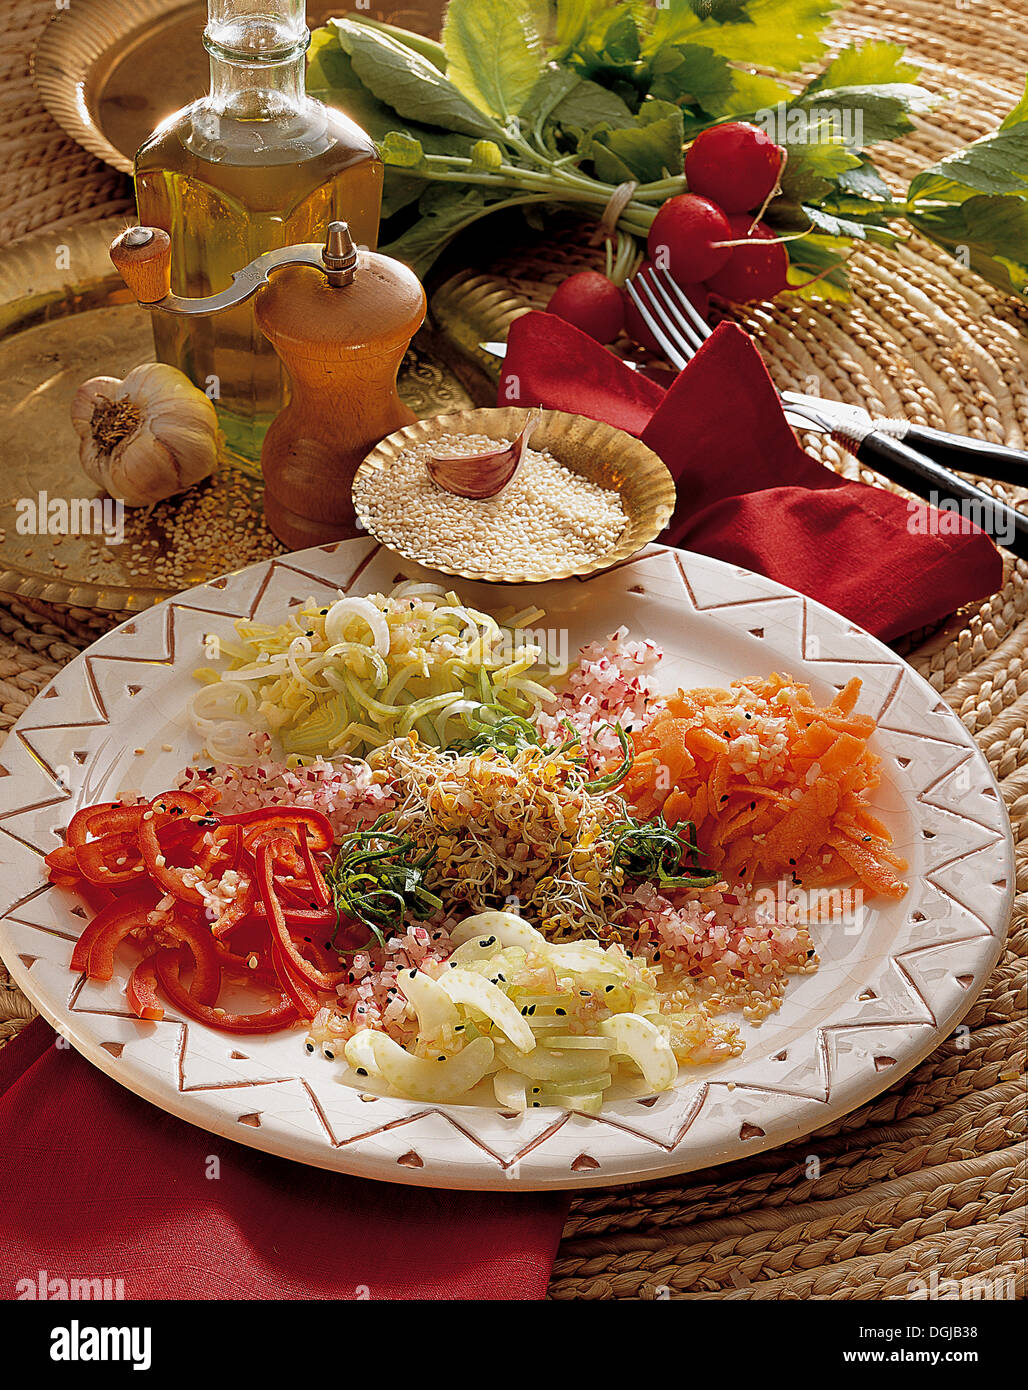 Crunchy raw vegetable salad, Tunisia. Stock Photo